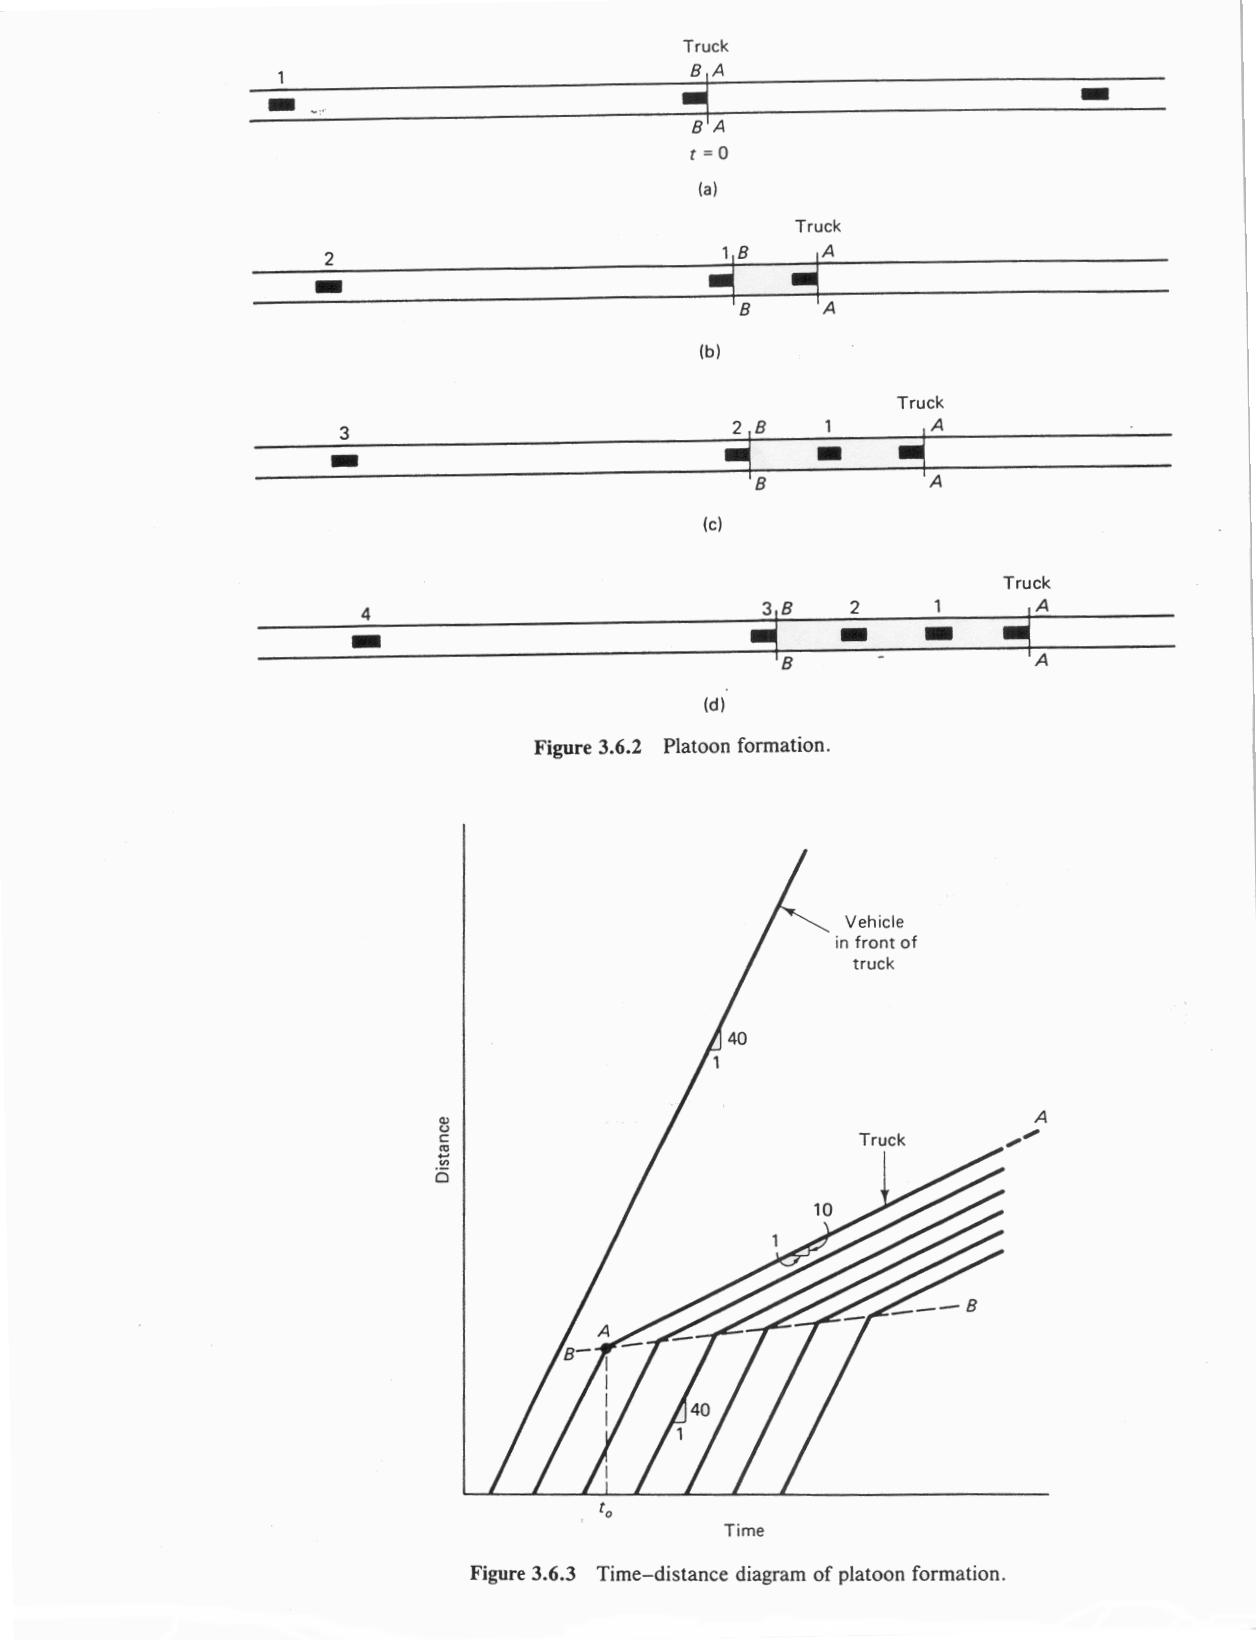 Diagram of platoon formation and shockwave propogation